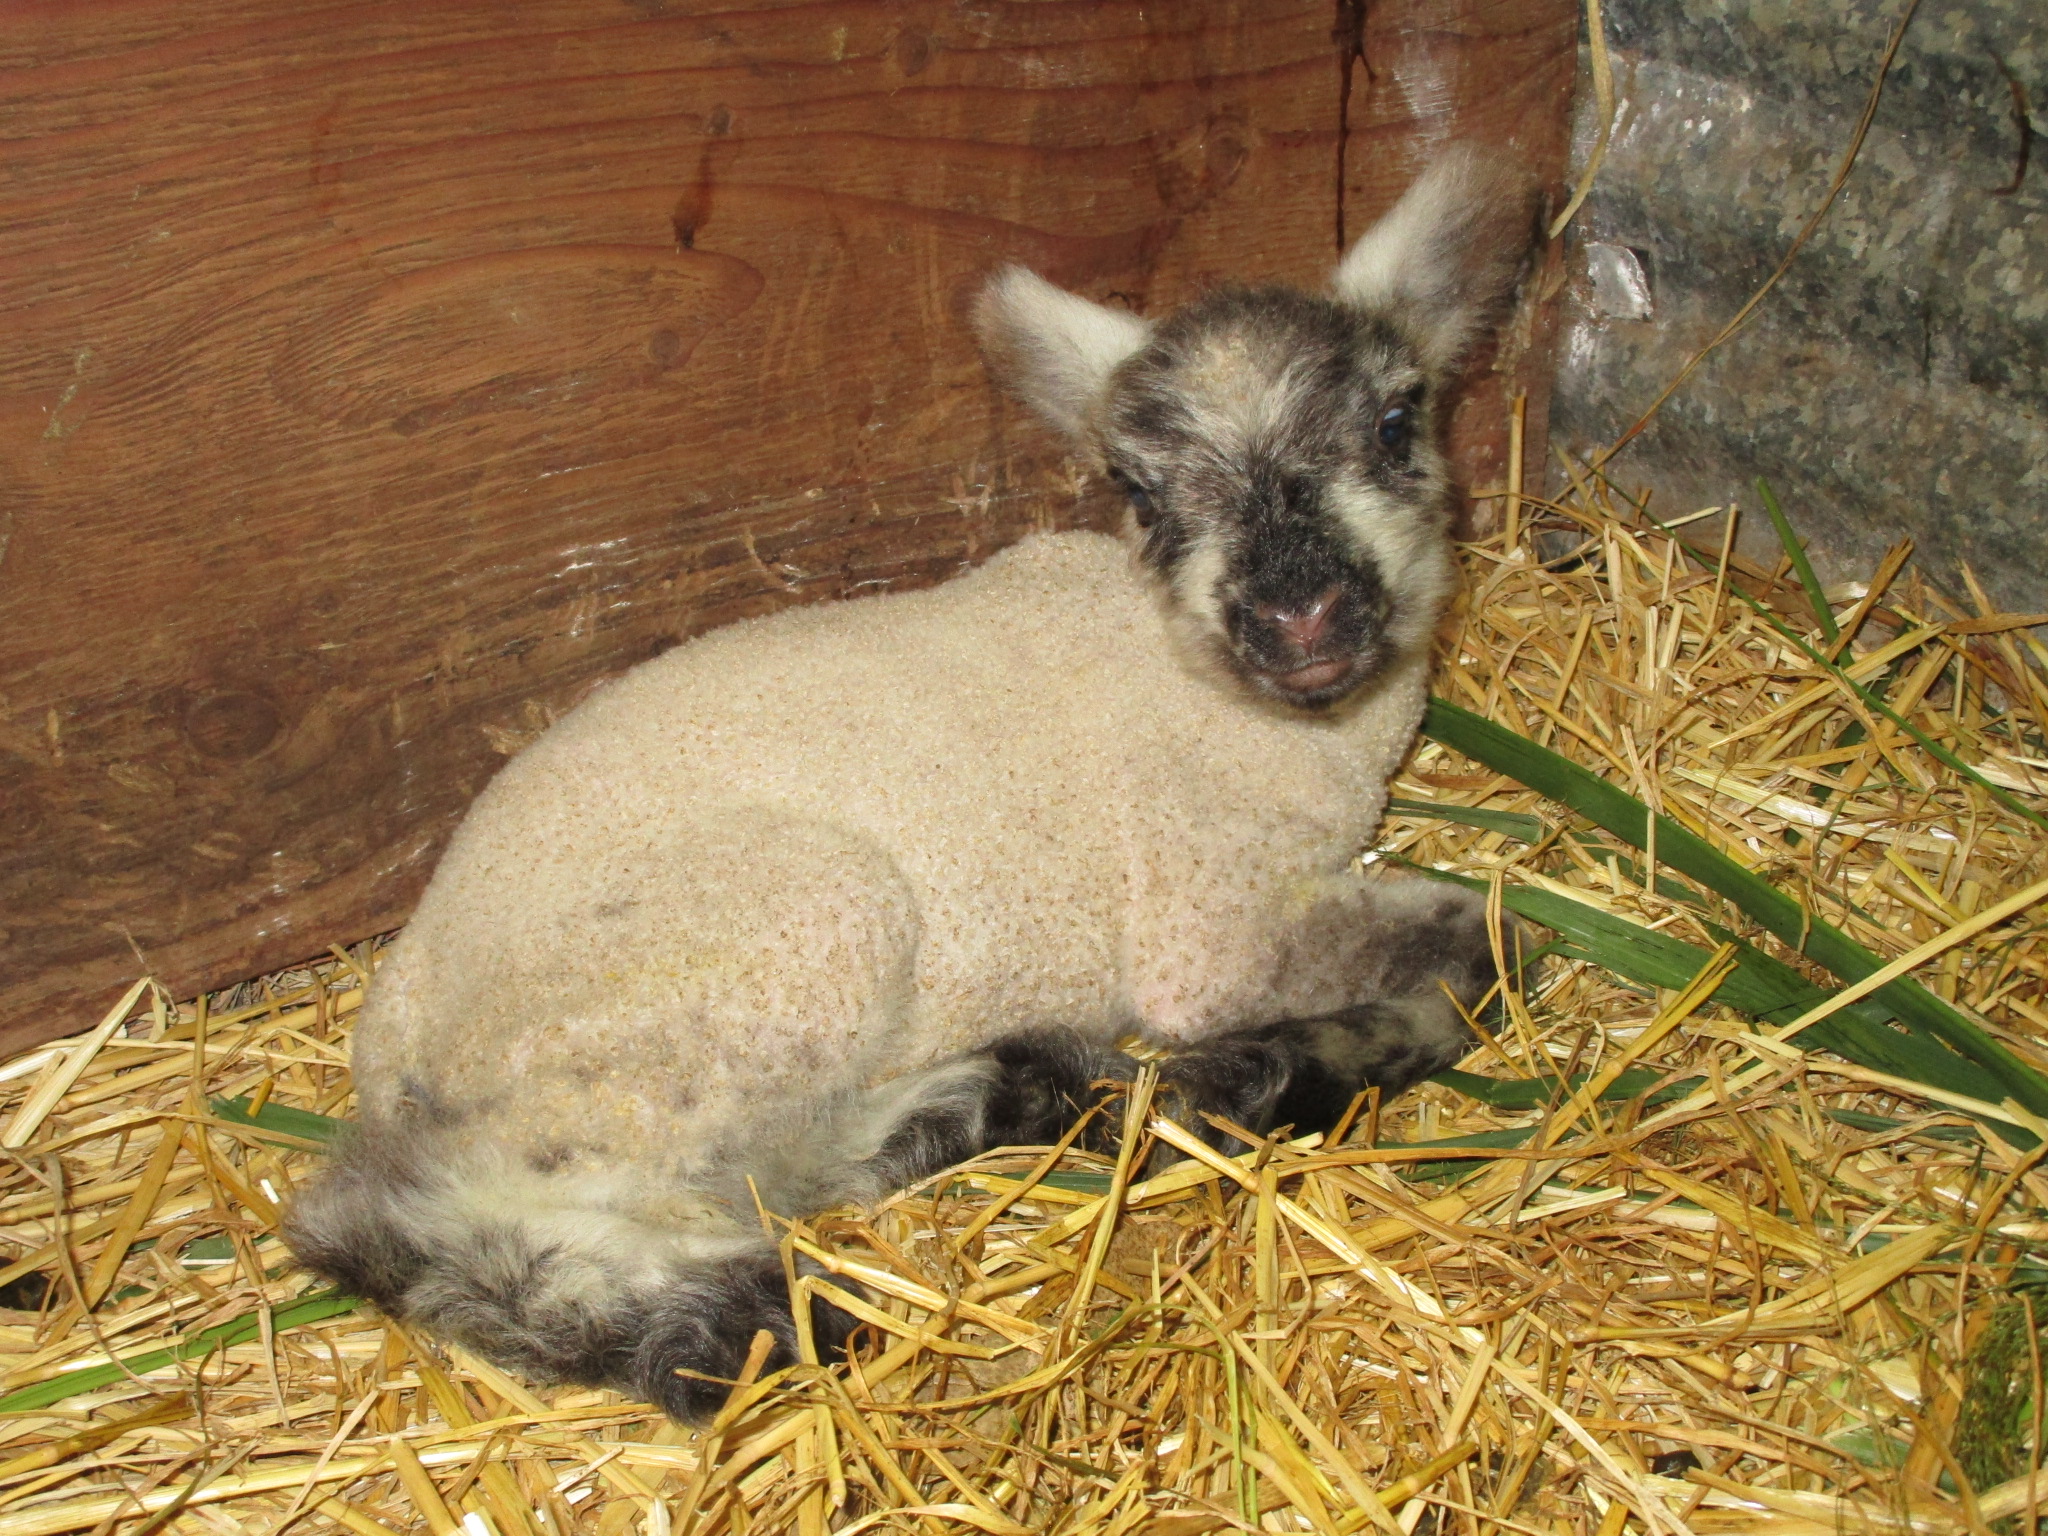 1st born ram lamb @ 5 days old